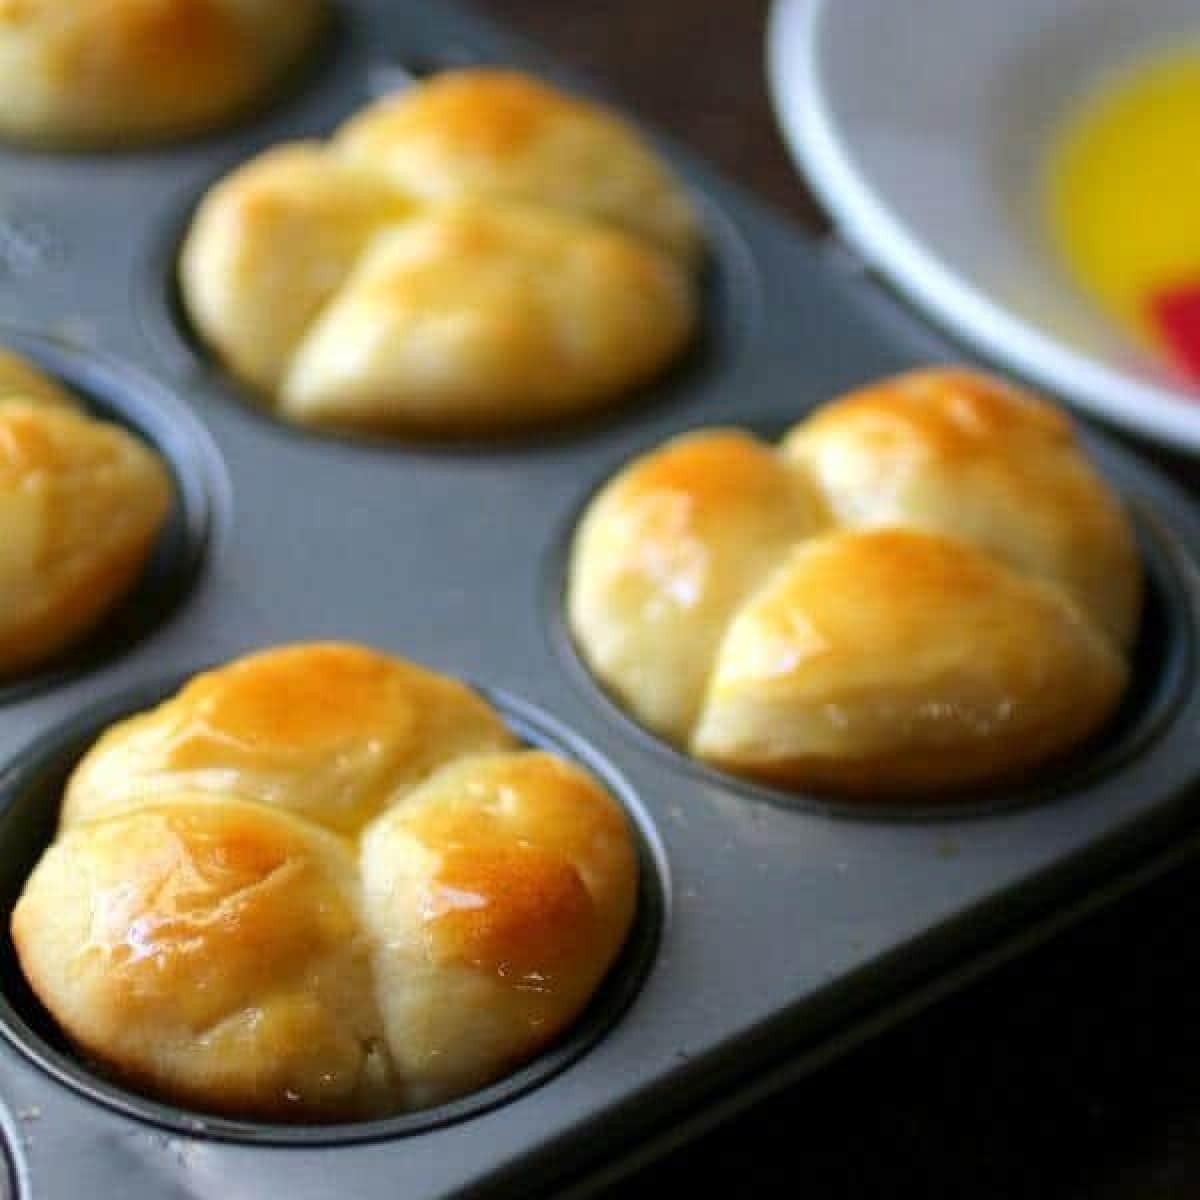 Freshly baked cloverleaf rolls in a muffin tin.